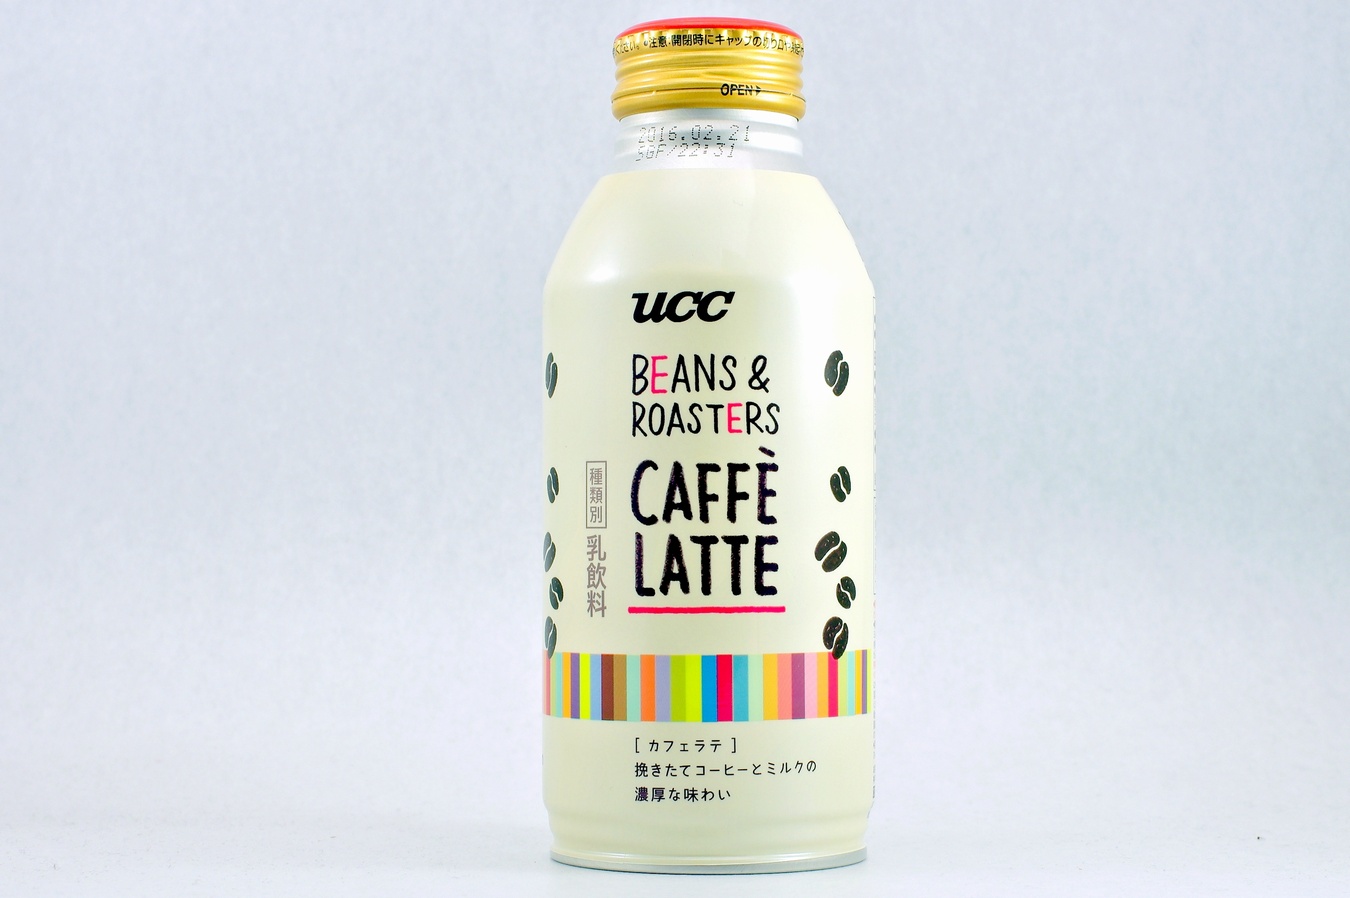 UCC BEANS & ROASTERS CAFFÈ LATTE 2015年3月